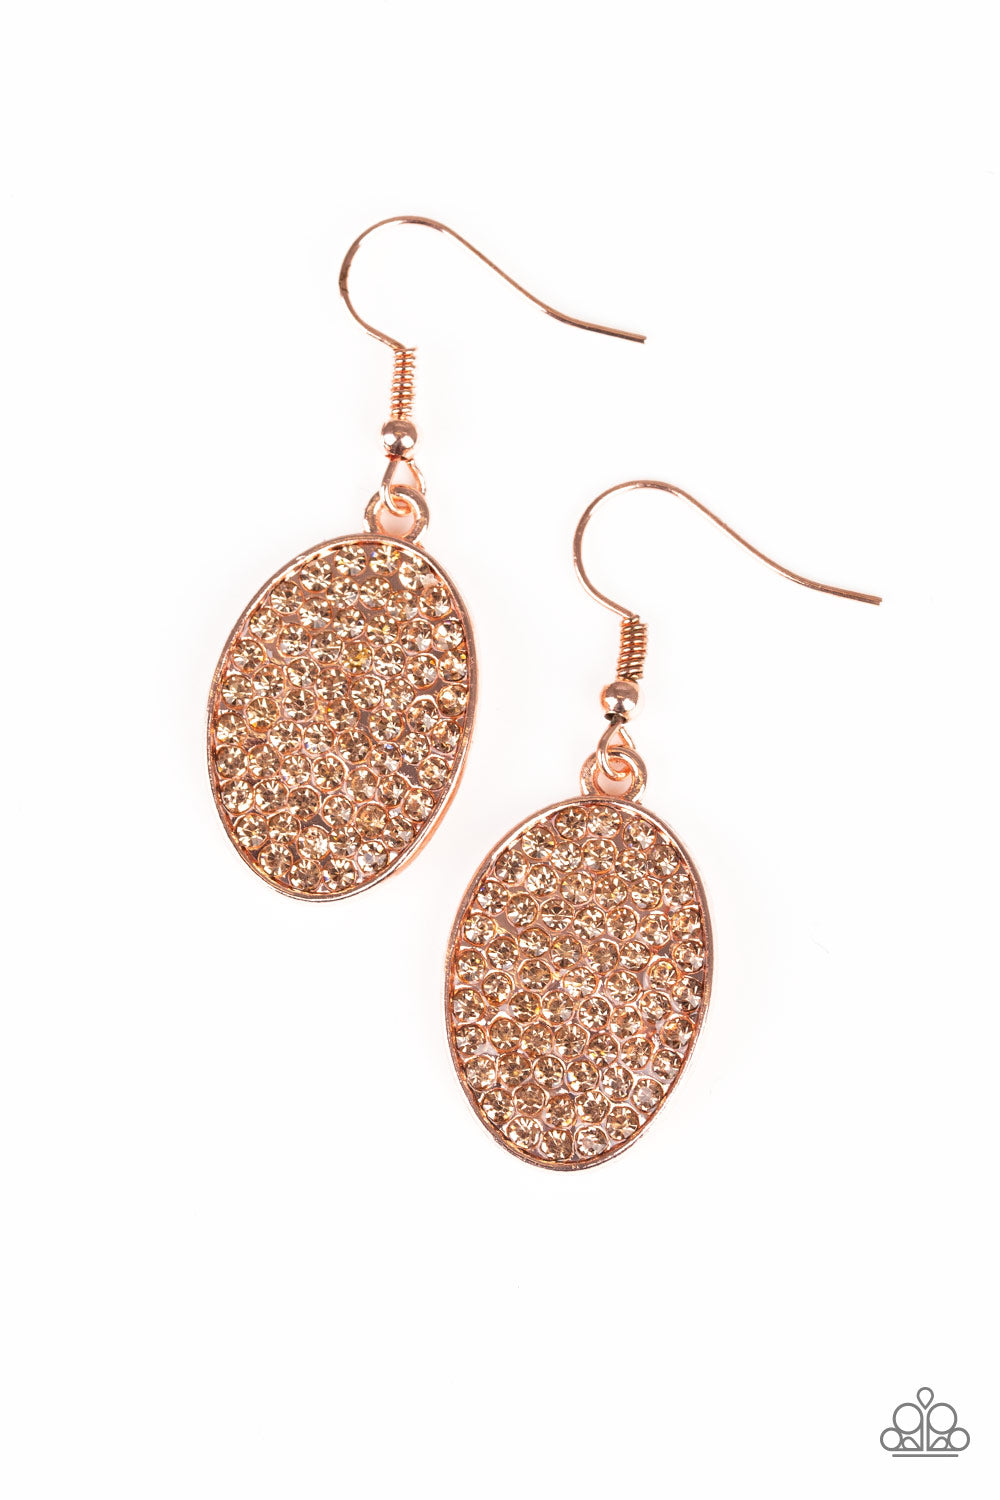 All Dazzle Copper Paparazzi Earrings Cashmere Pink Jewels - Cashmere Pink Jewels & Accessories, Cashmere Pink Jewels & Accessories - Paparazzi